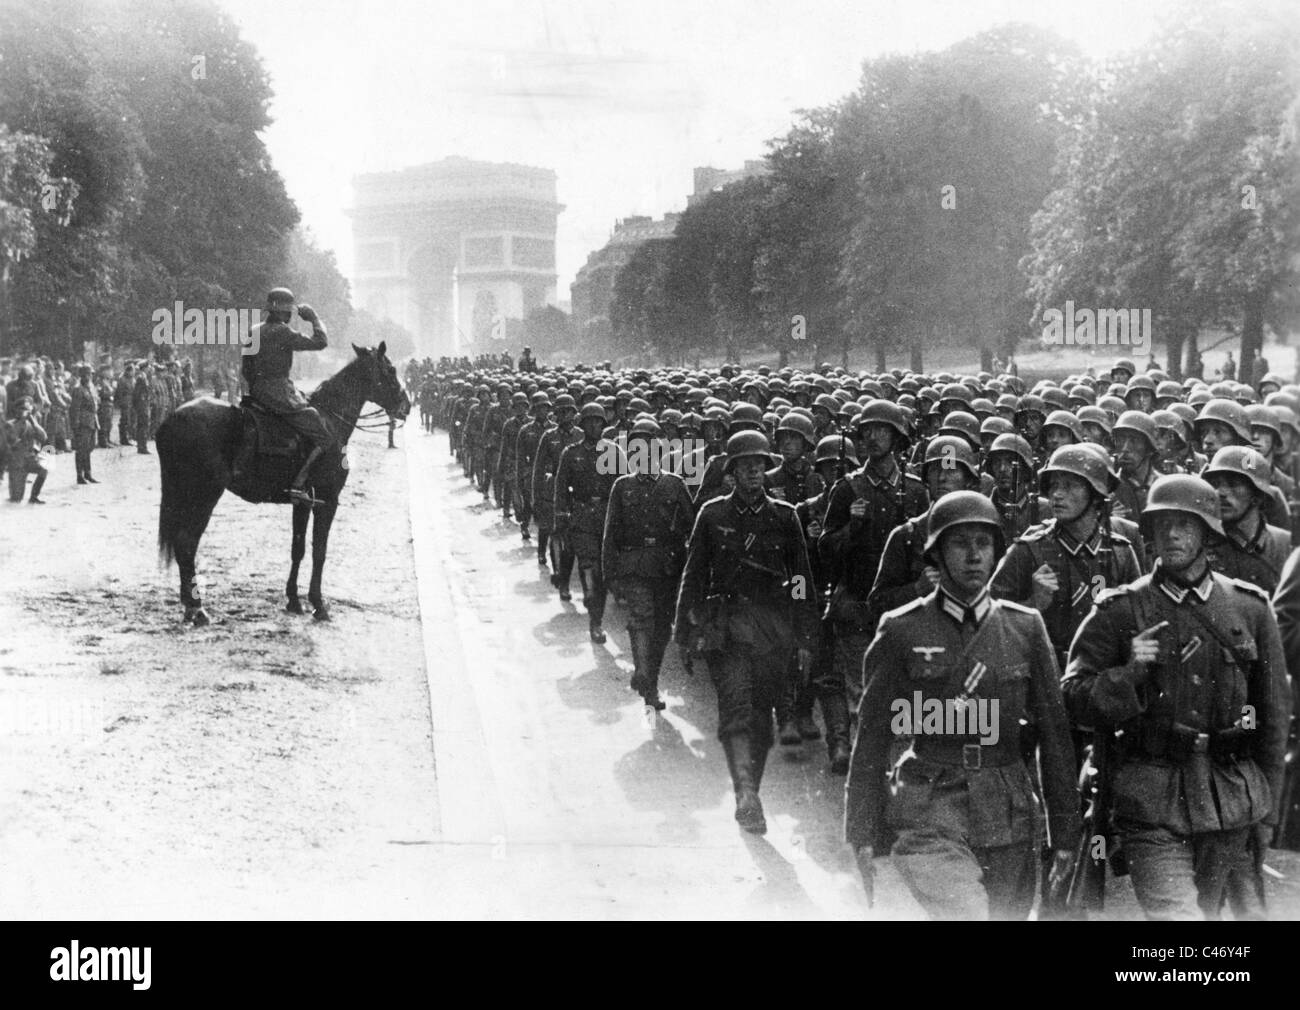 second-world-war-victory-parade-in-paris-june-1940-C46Y4F.jpg